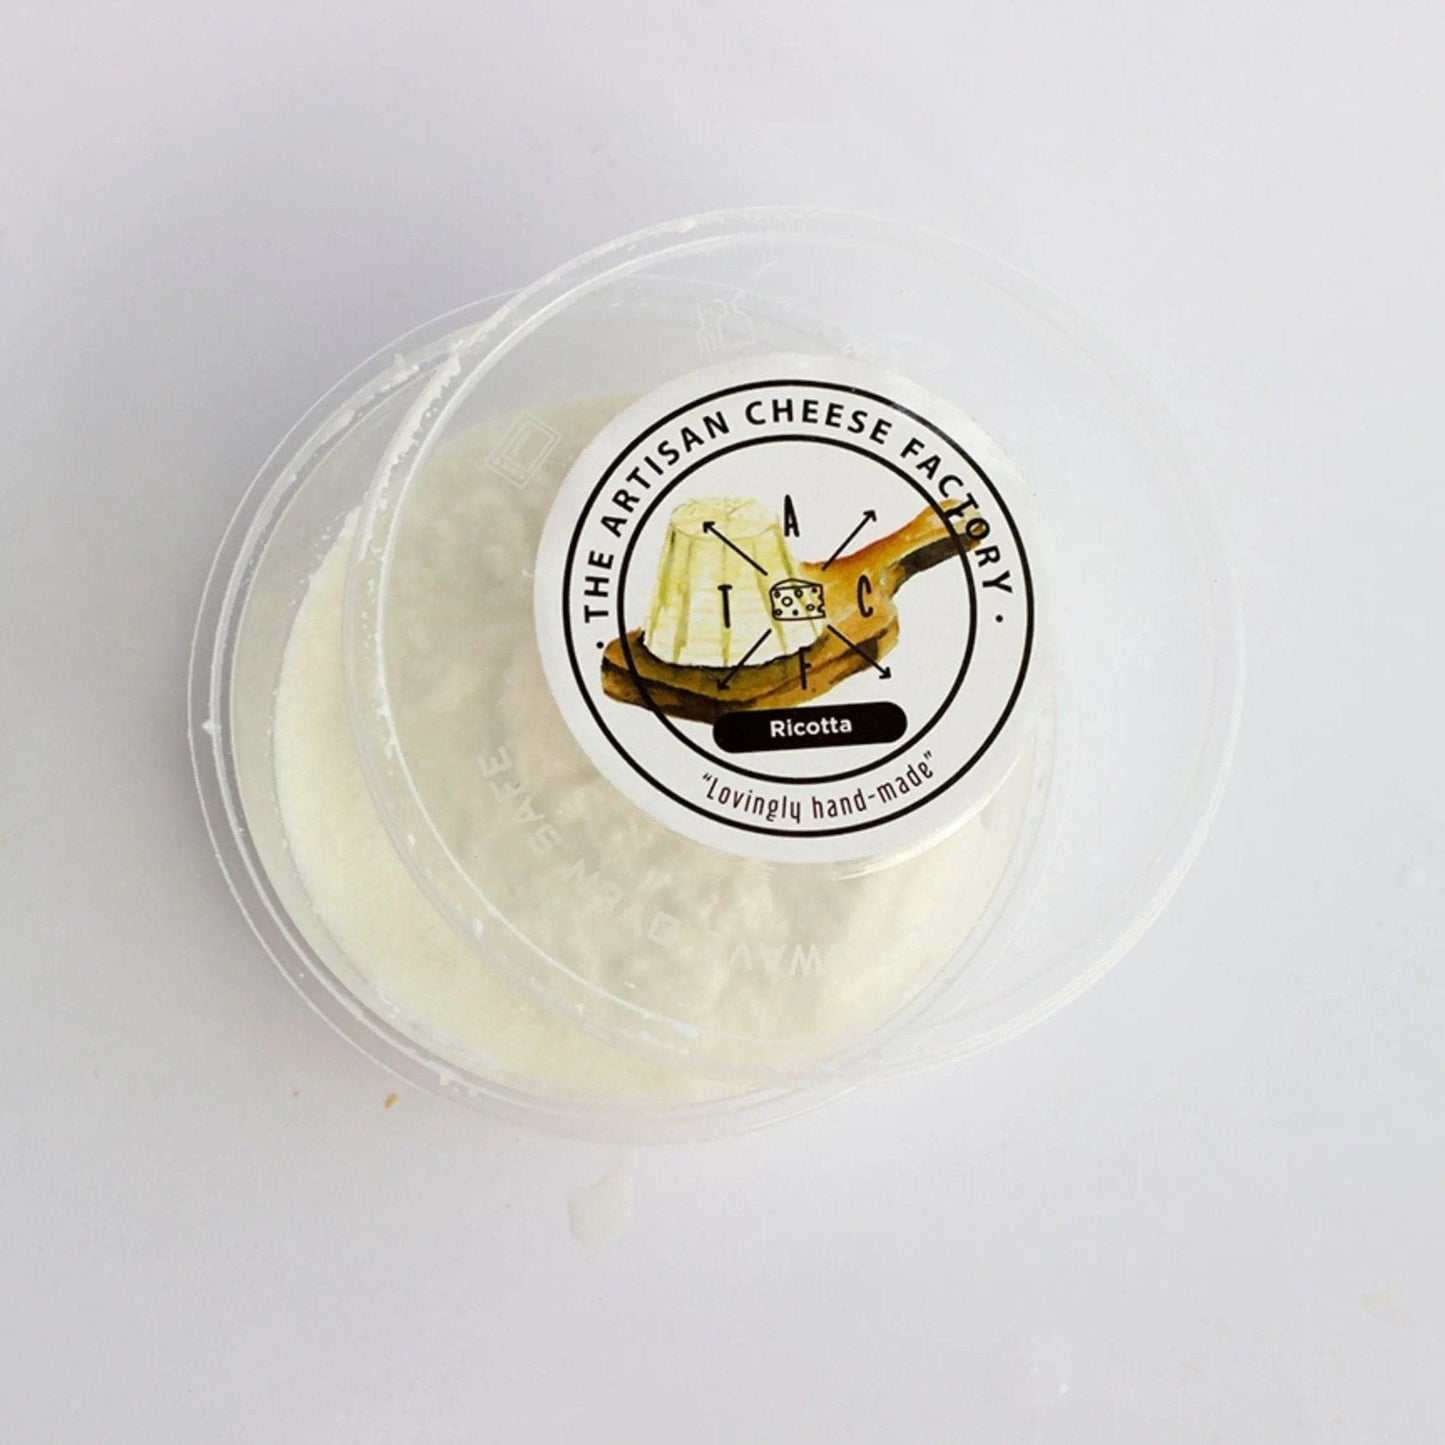 Ricotta - Artisan Cheese Factory